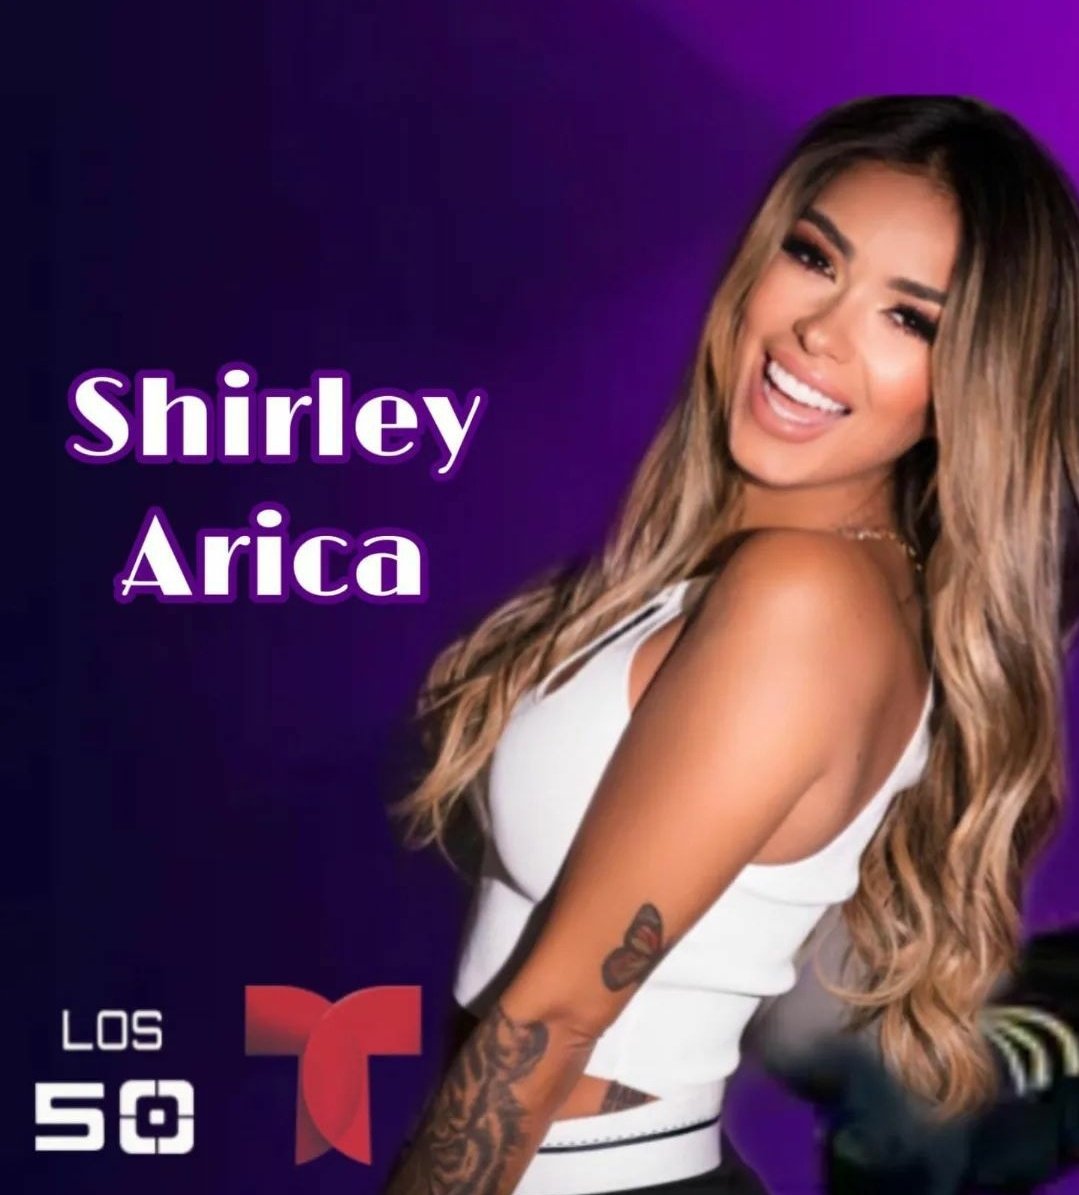 Quinta confirmada Shirley Arica ❤